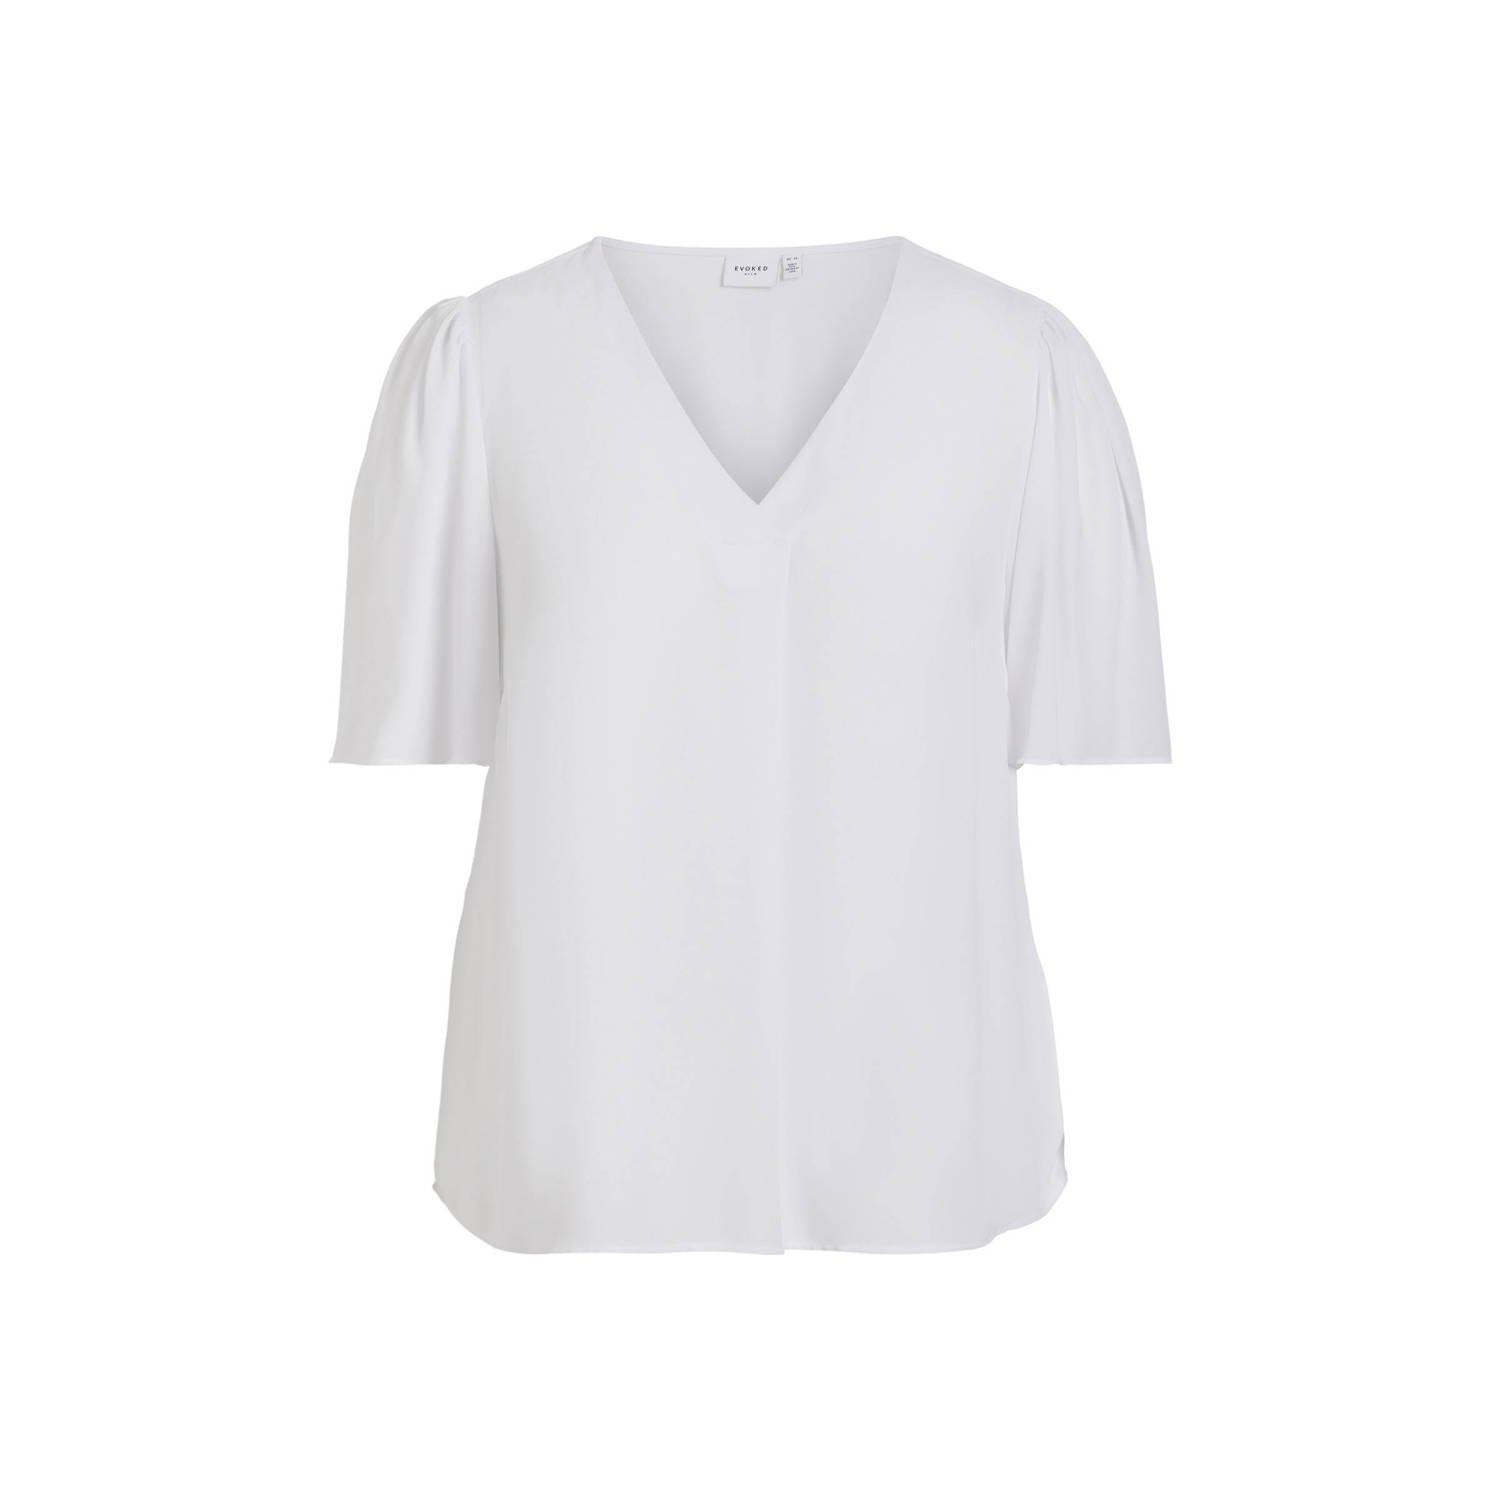 EVOKED VILA blousetop van gerecycled polyester wit